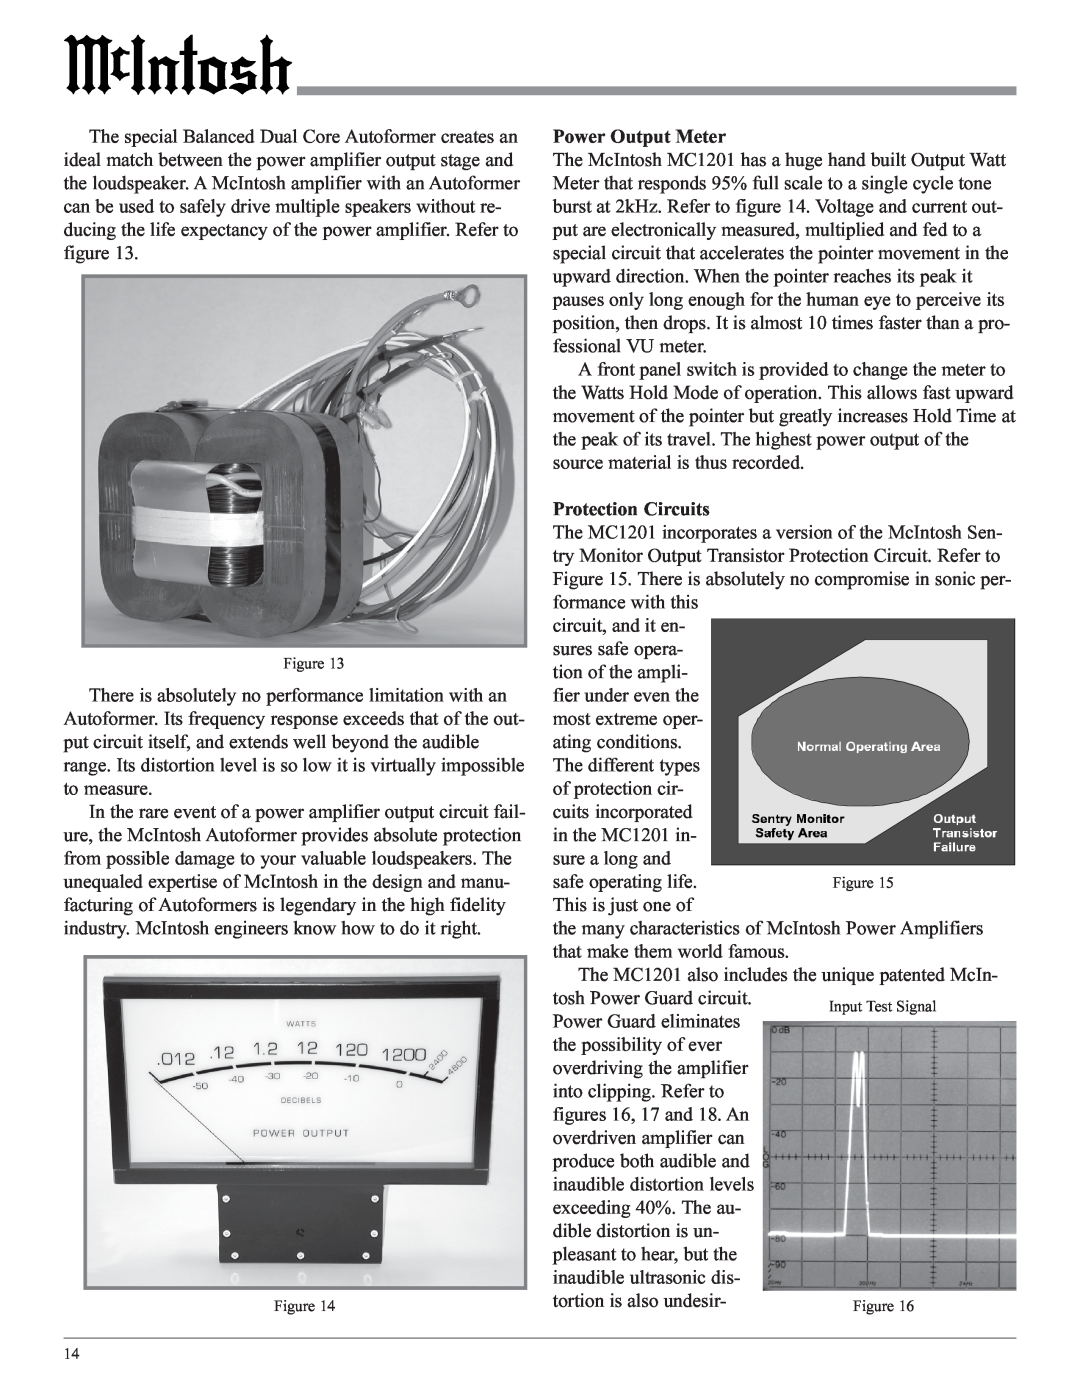 McIntosh MC1201 manual Power Output Meter, Protection Circuits 